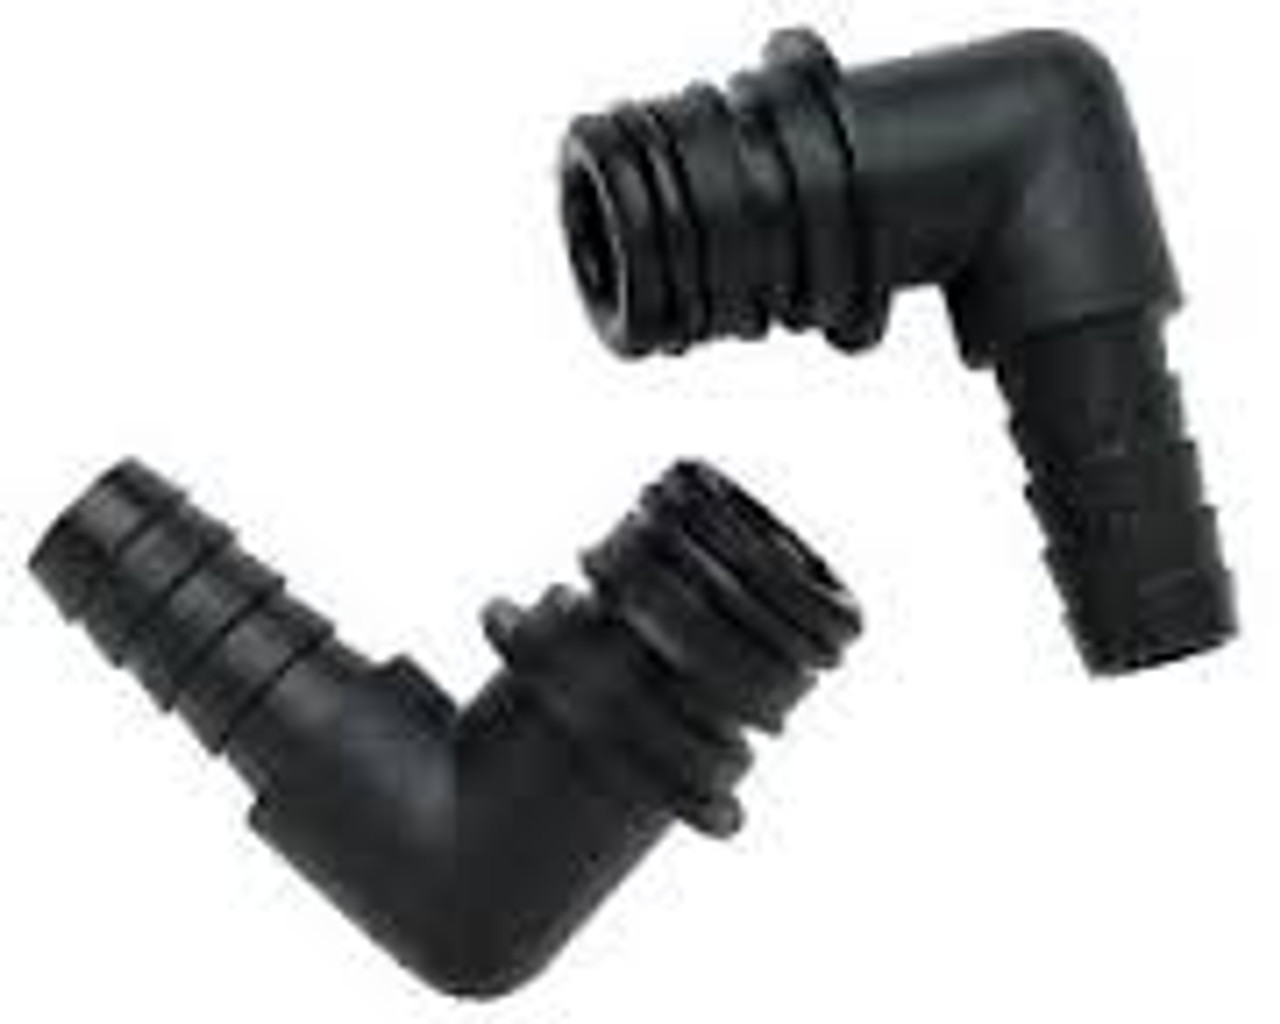 Adaptor fittings Flojet/Jabsco PushLoc x 12mm (1/2") hose tail elbow Pair